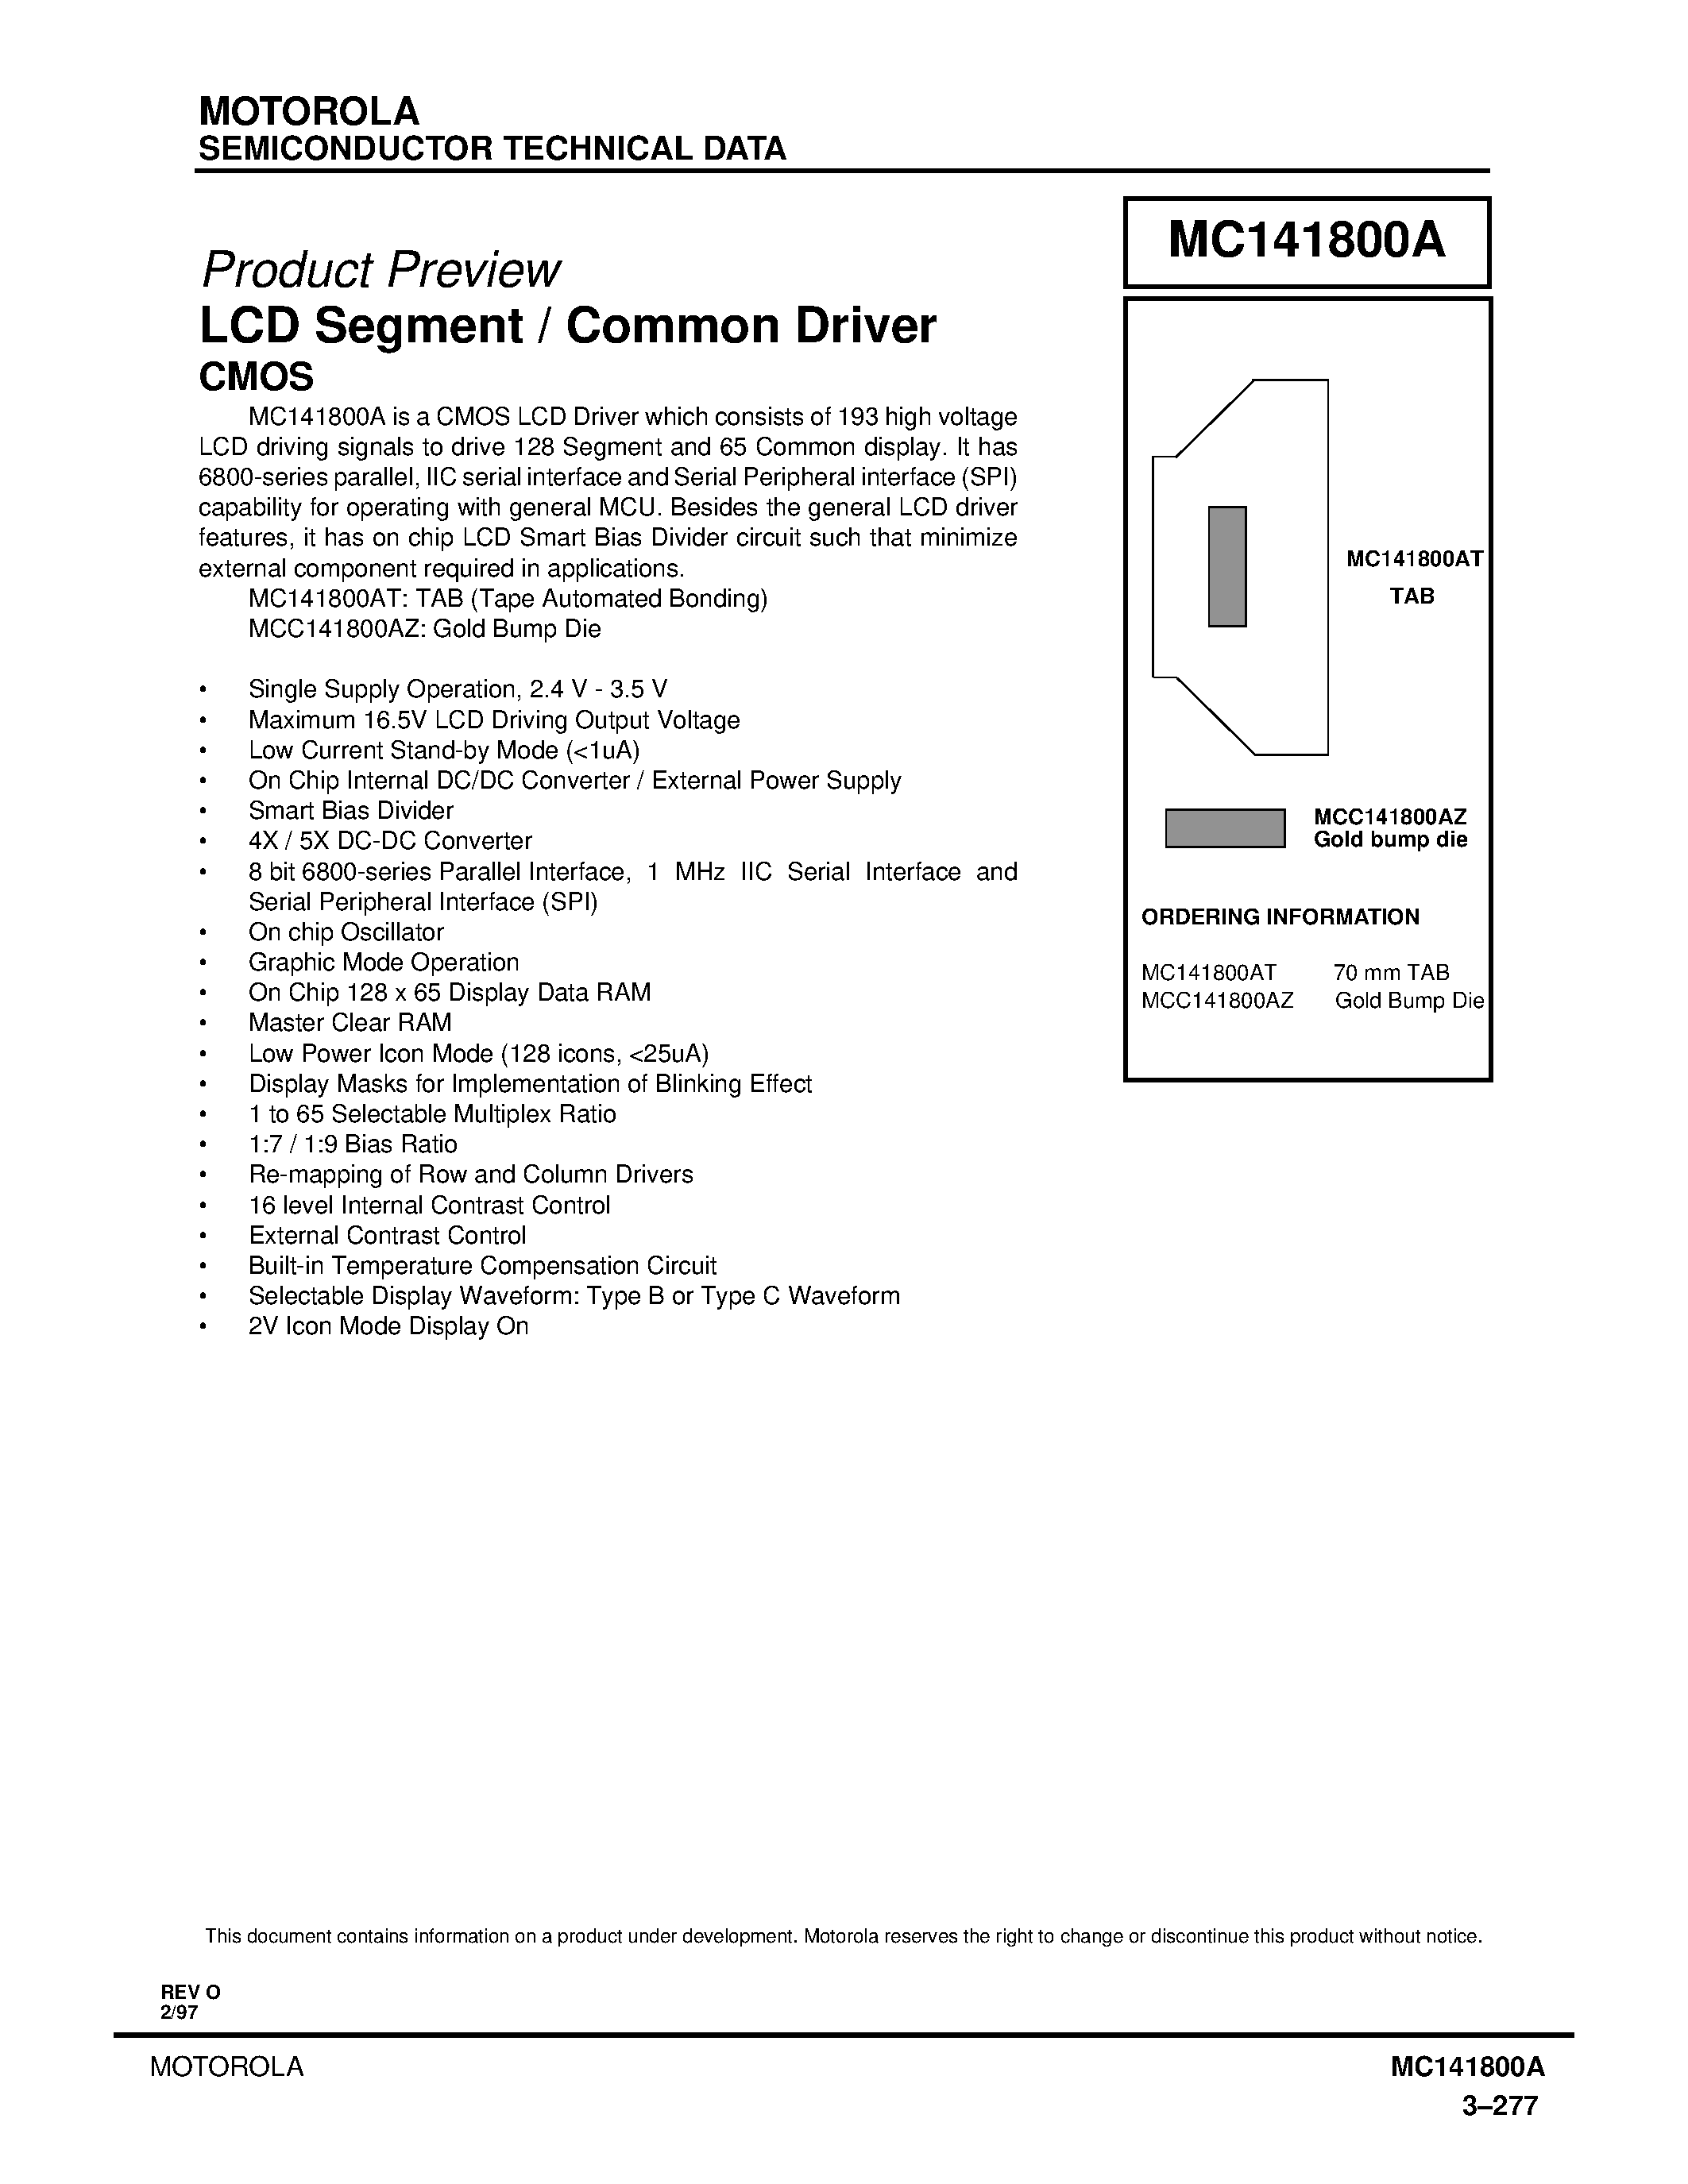 Datasheet MC141800AT - LCD Segment/Common Driver page 1